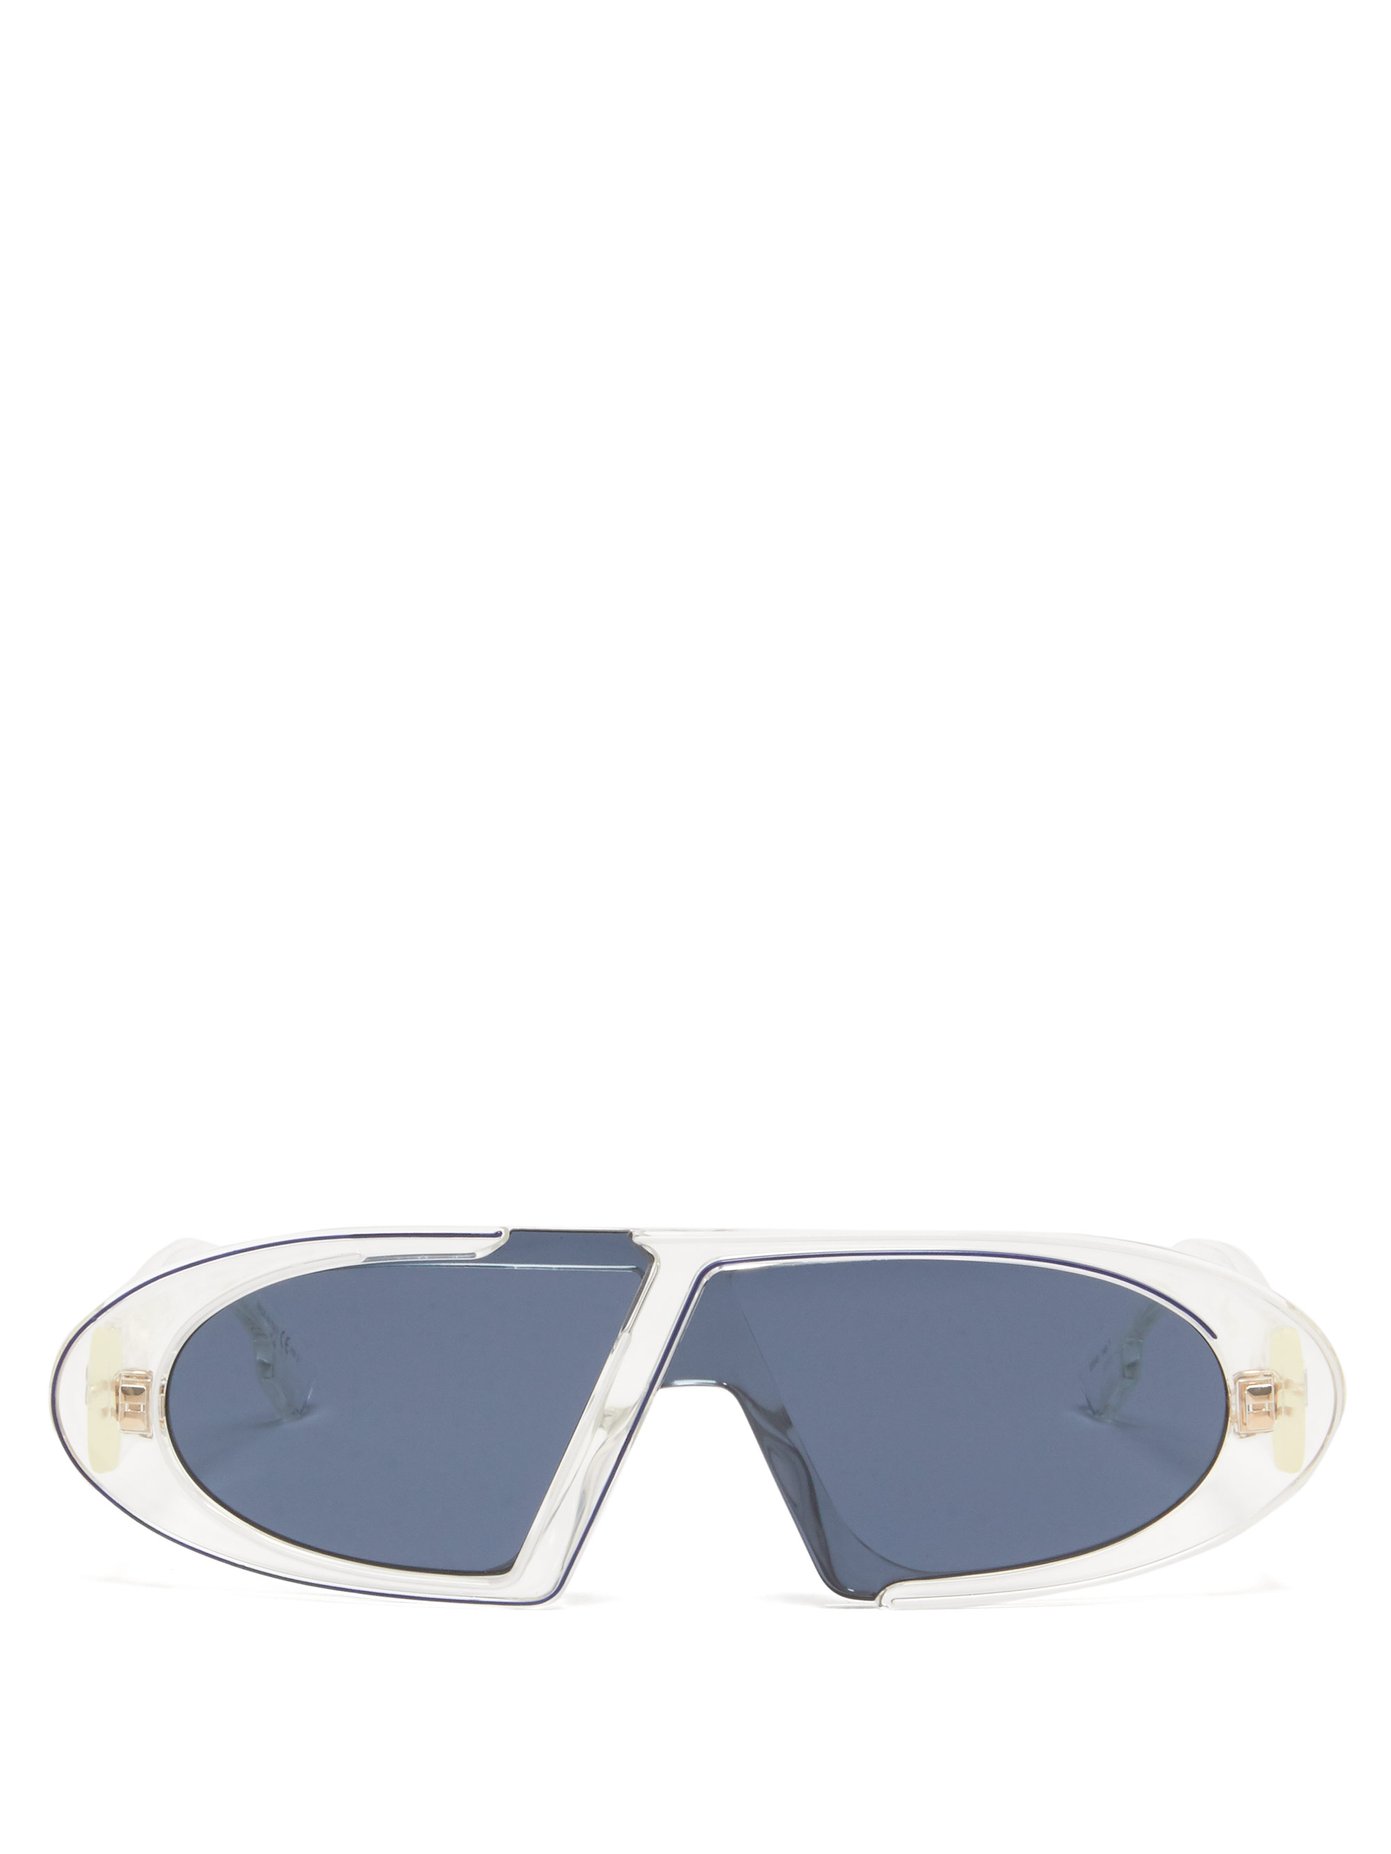 CD oval acetate sunglasses | Dior 